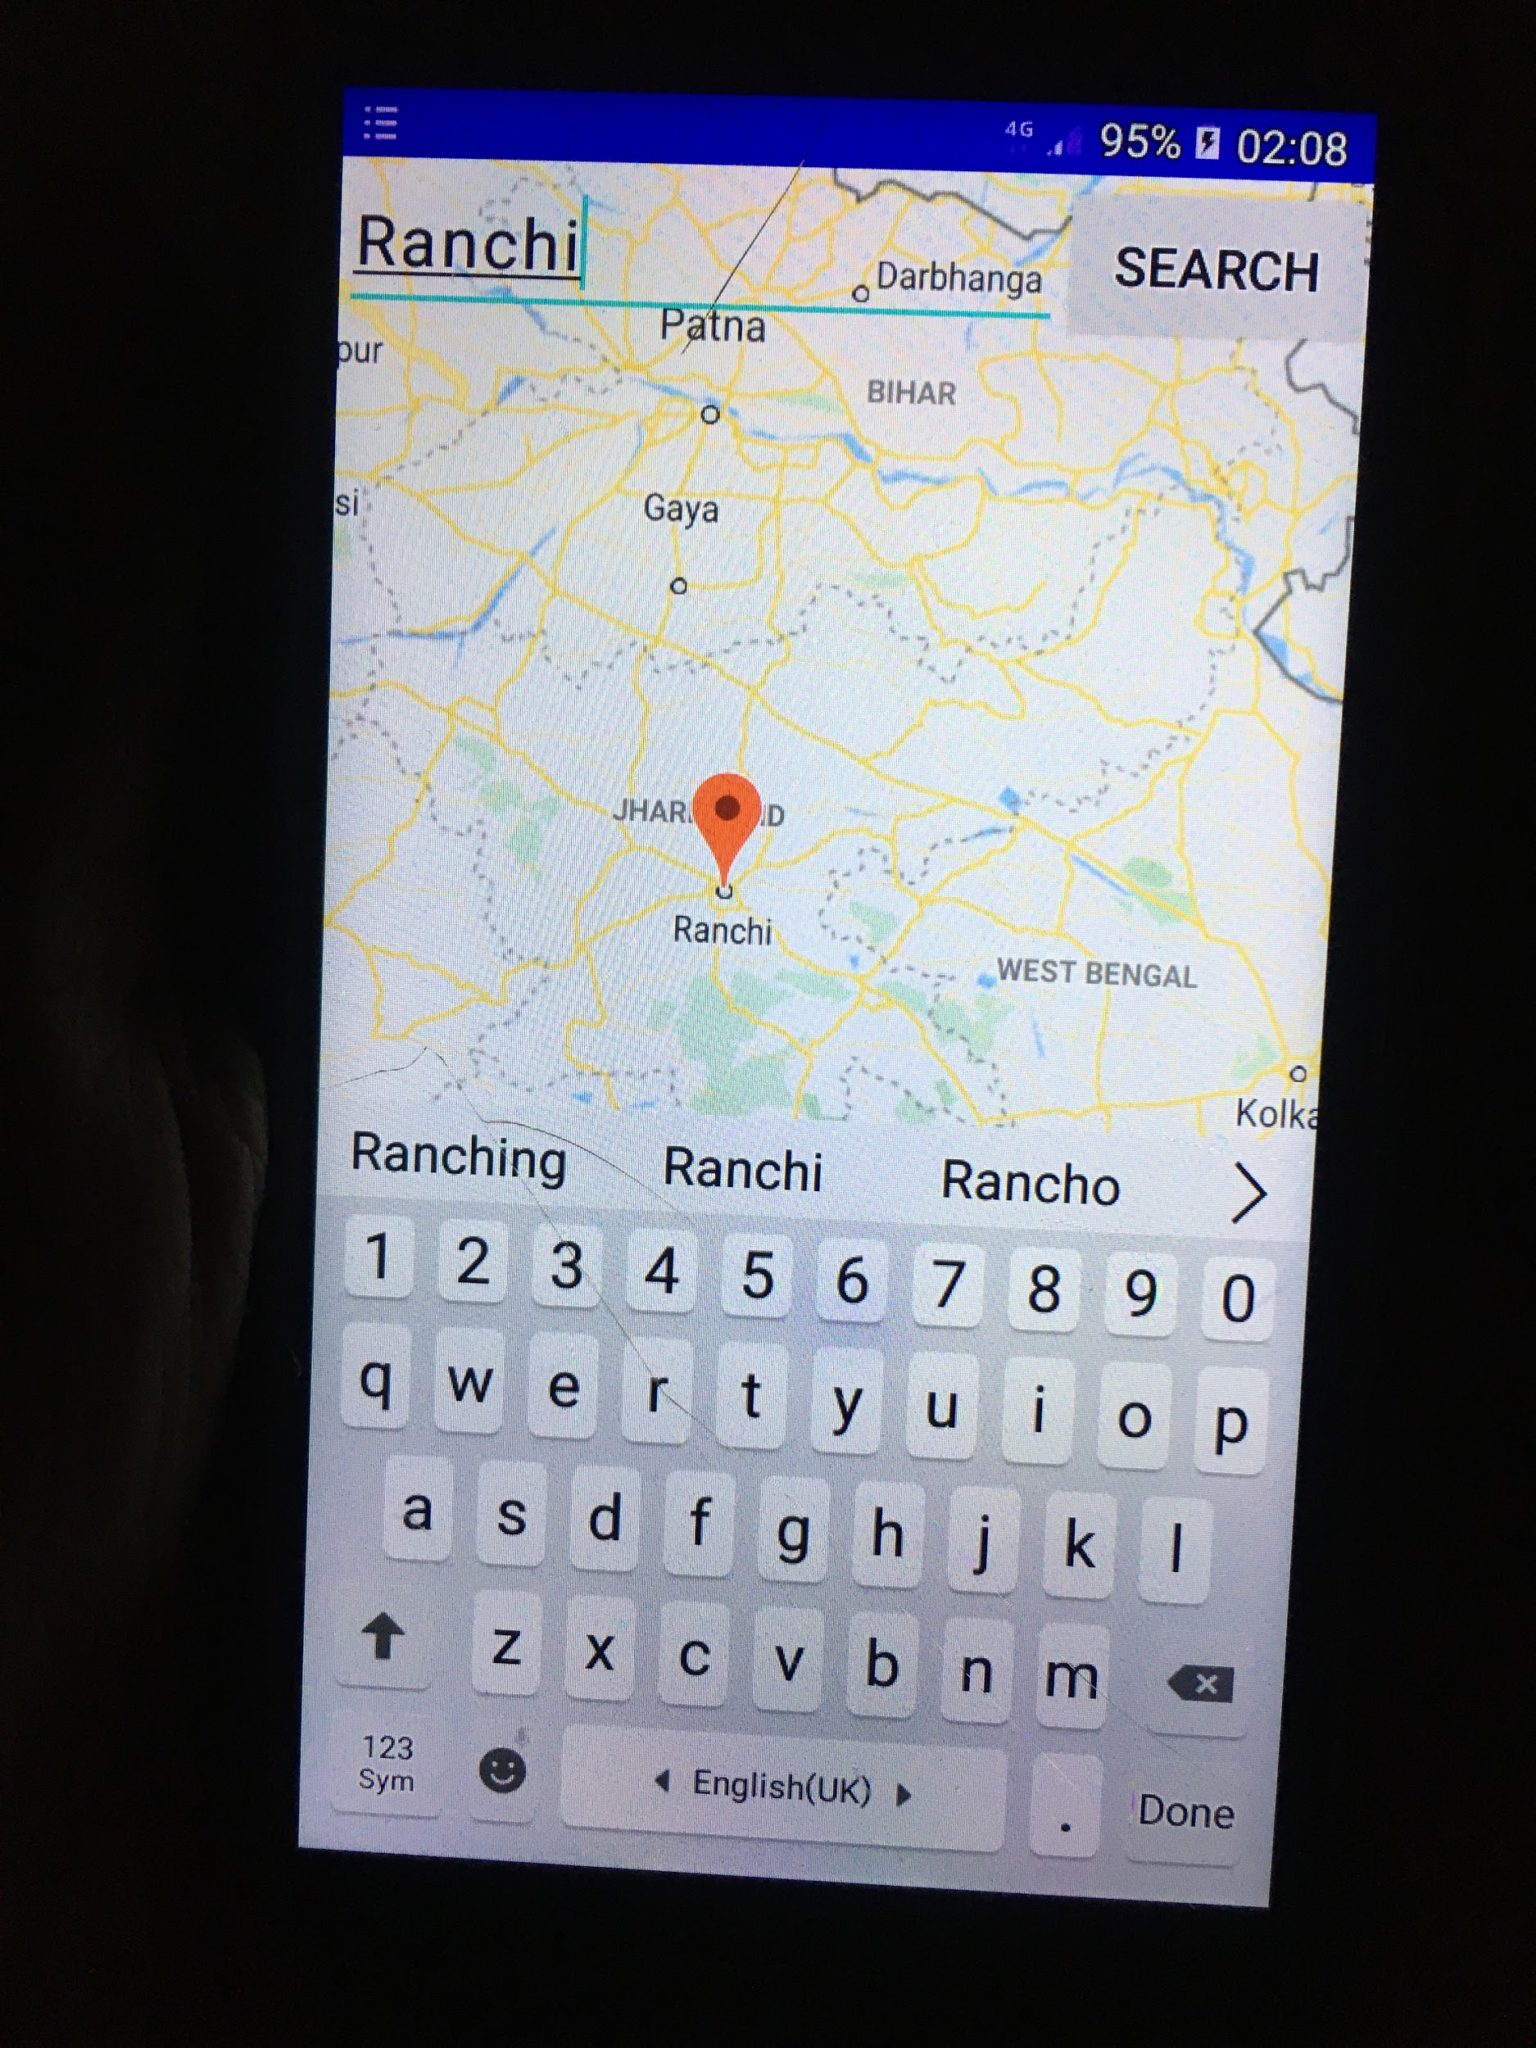 Android Google Map Search Location using Geocoder - W3schools